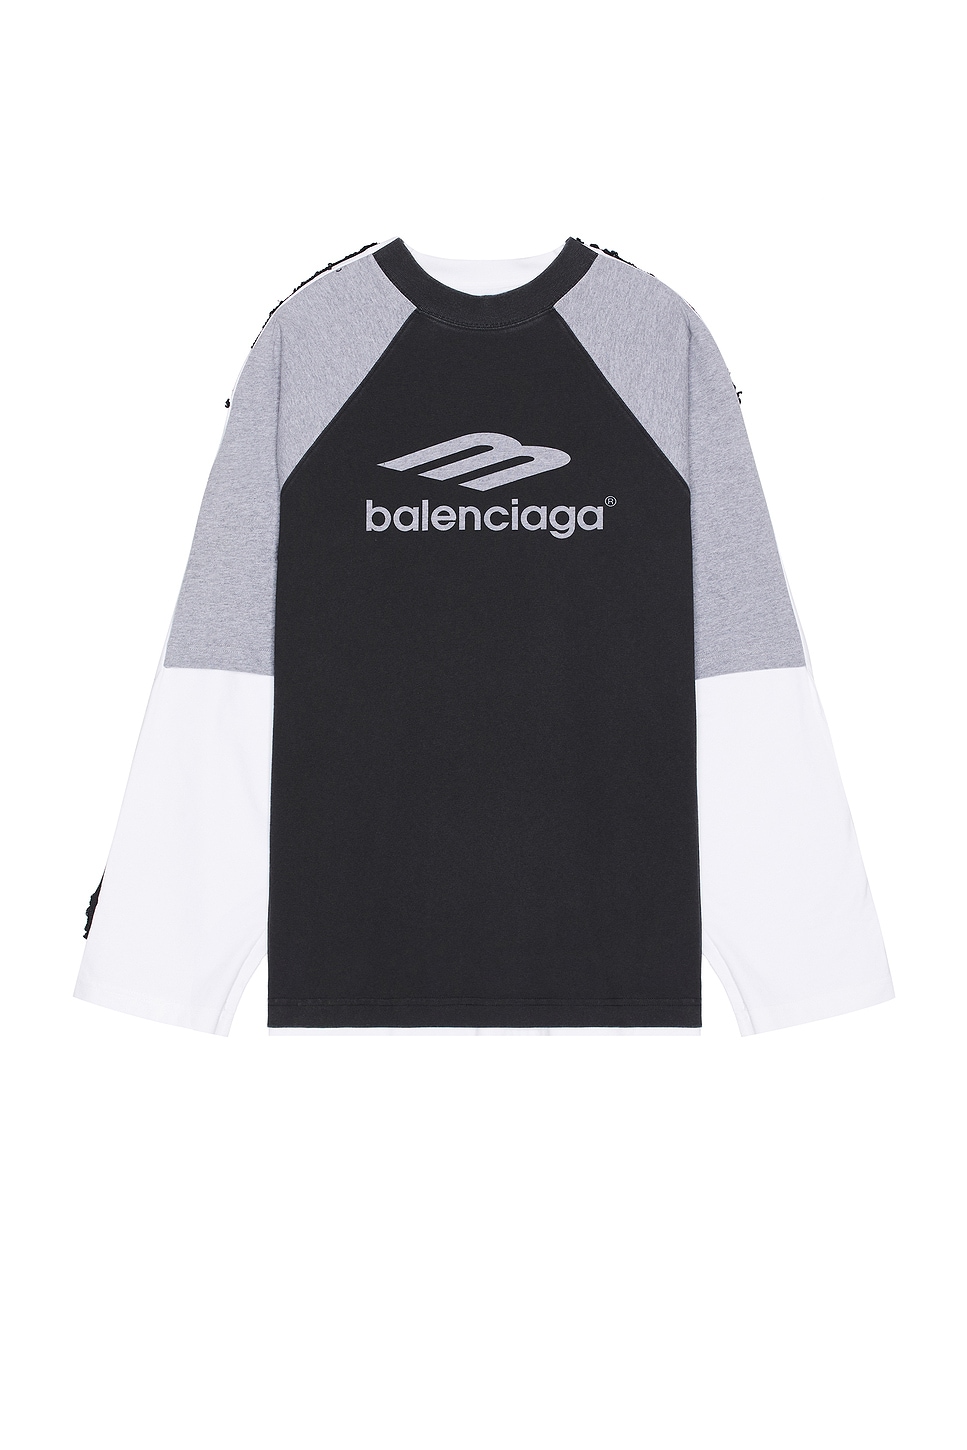 Image 1 of Balenciaga Hybrid Large Sweater in Black, White, & Grey